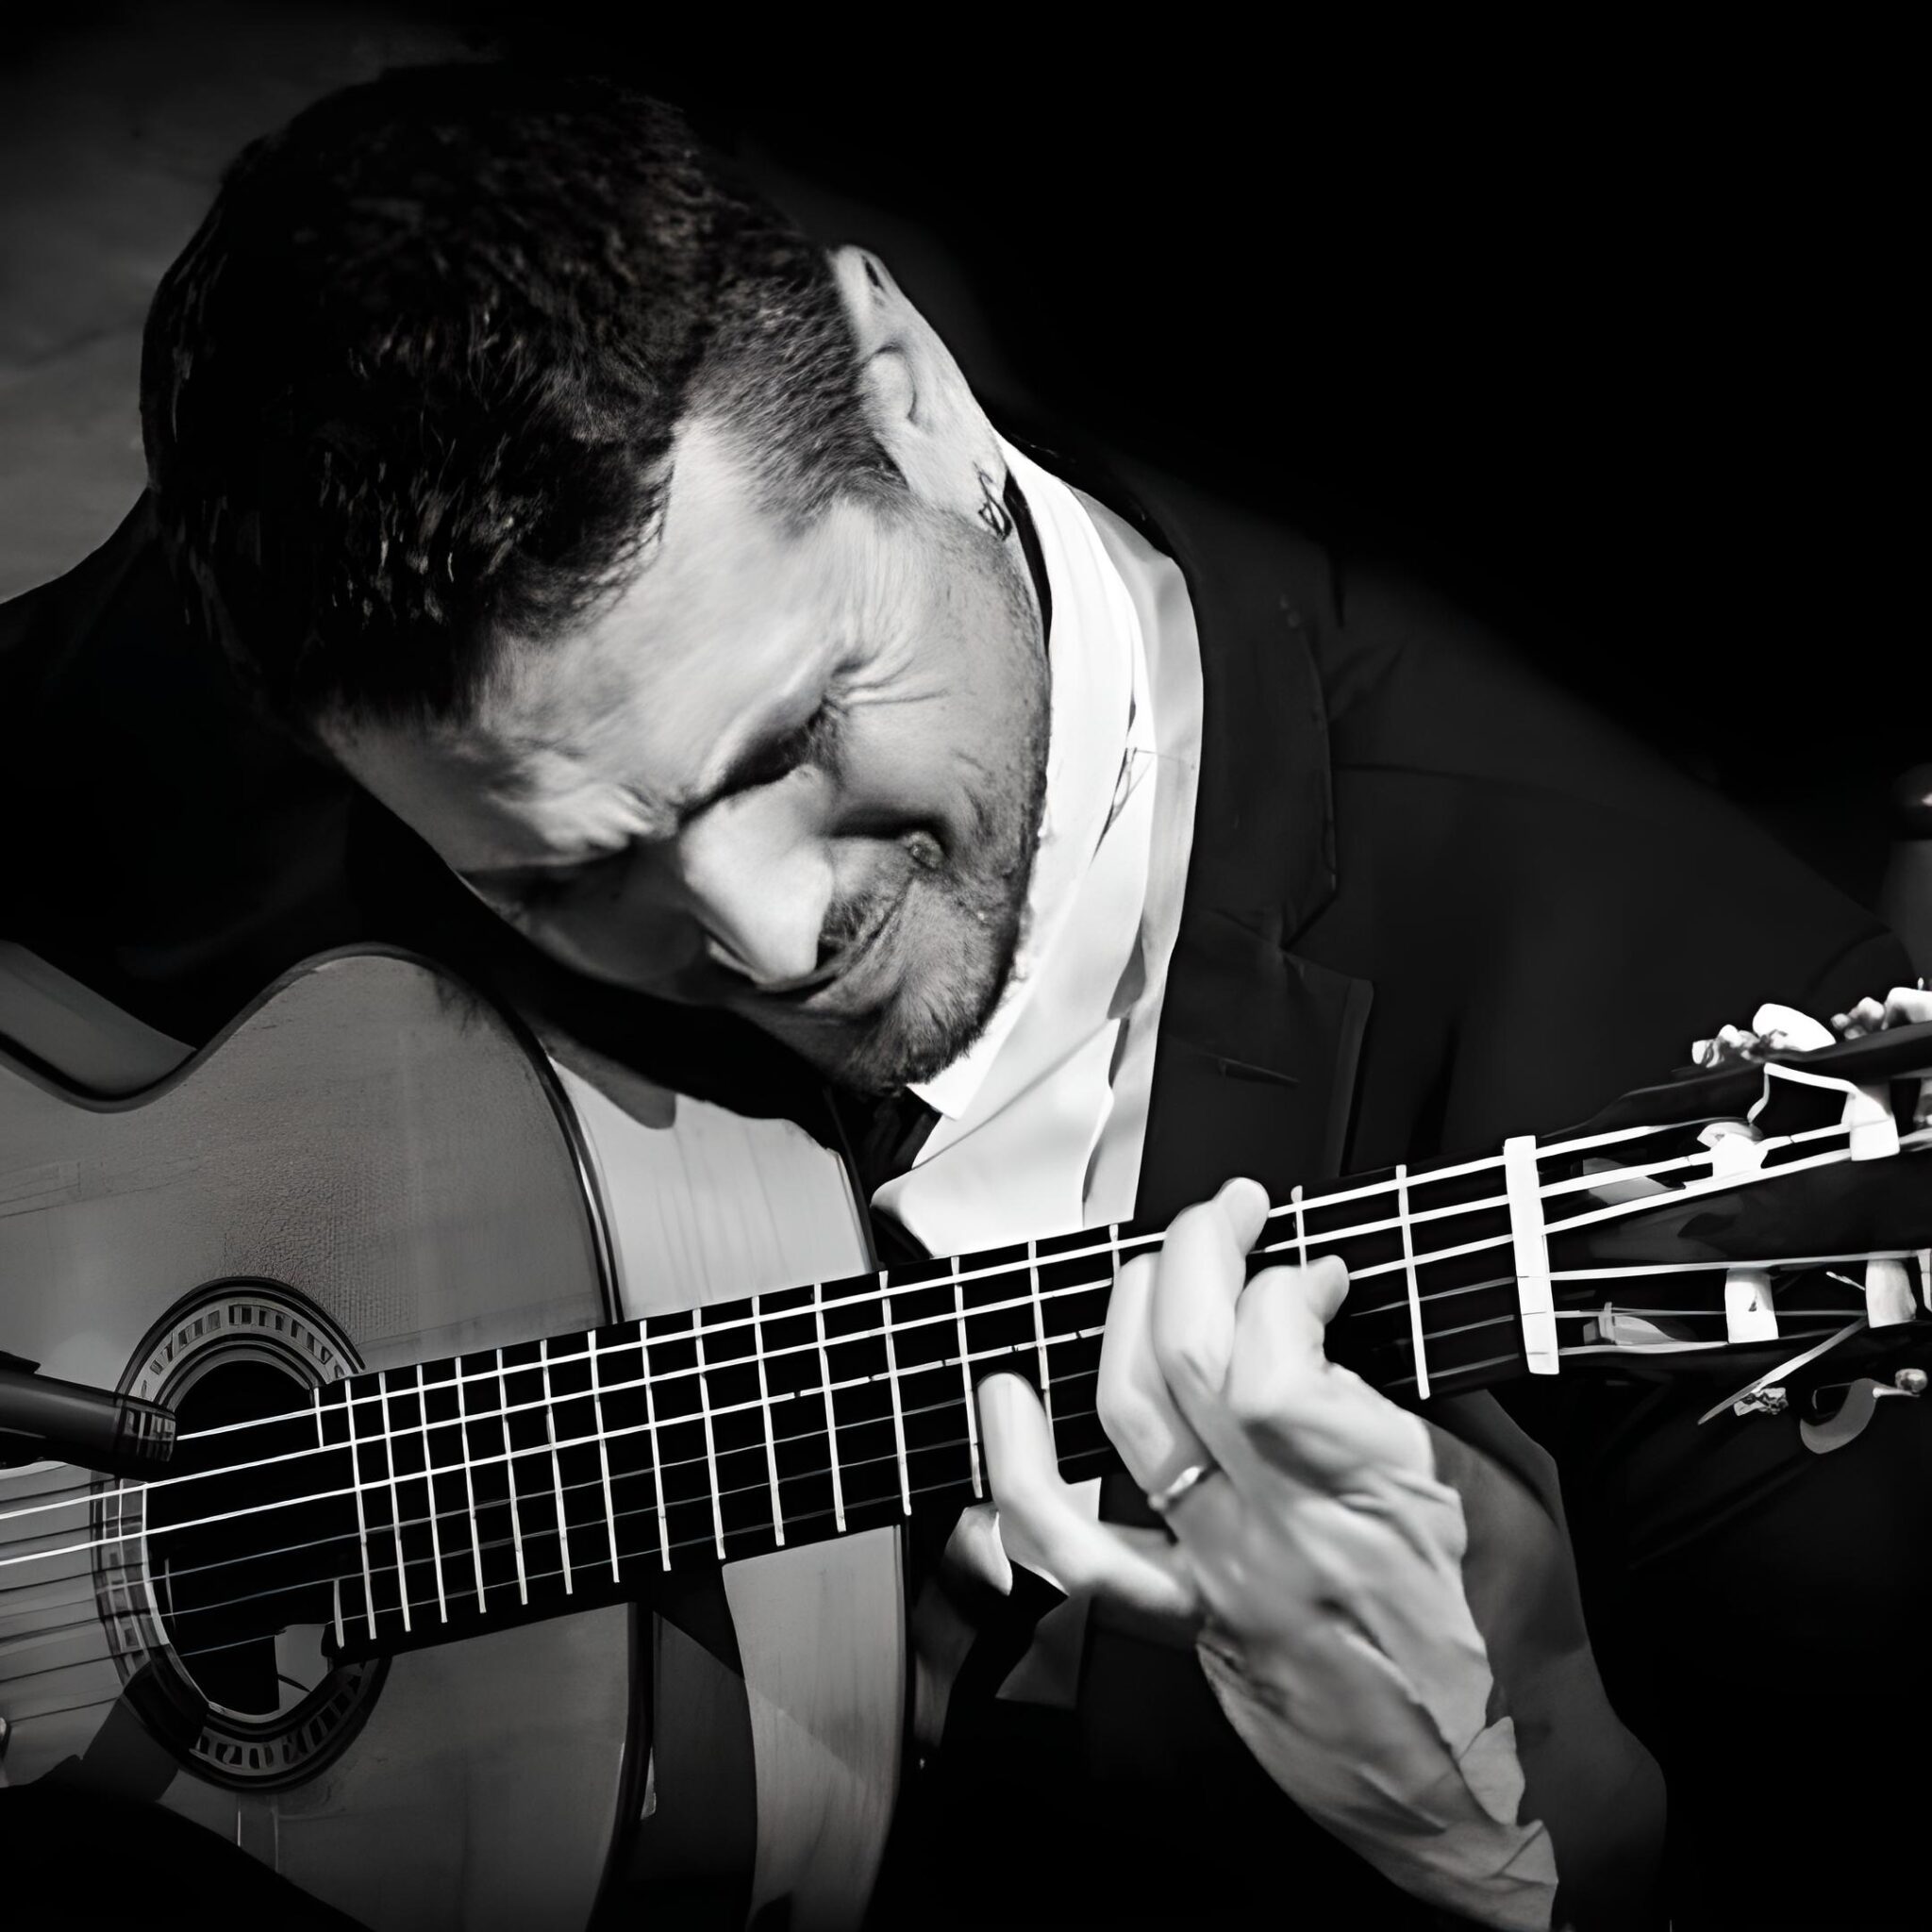 El guitarrista flamenco Marcos Palometas tocando la guitarra